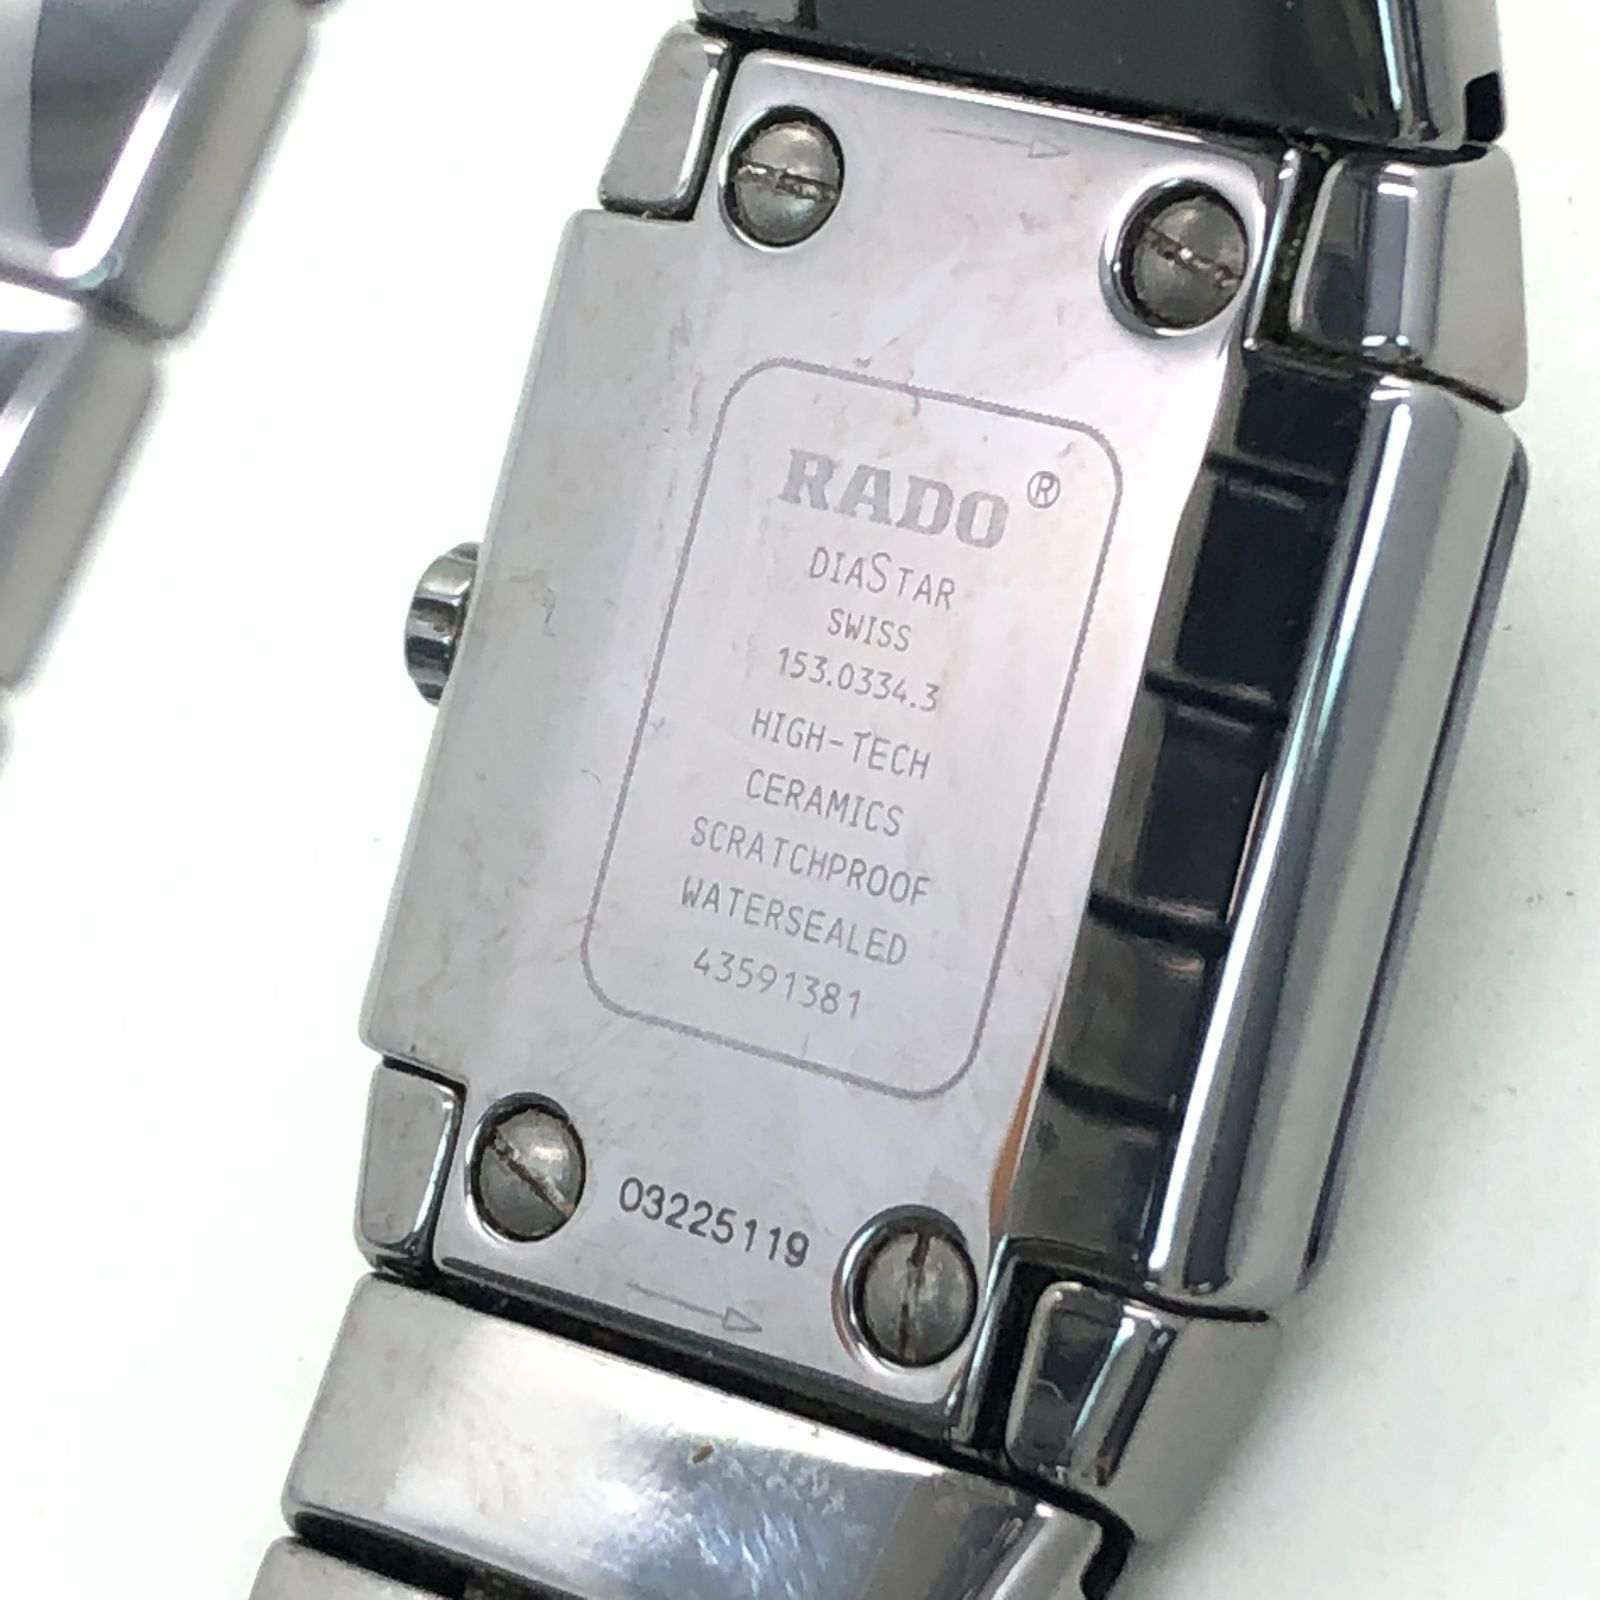 RADO ラドー ダイヤスター 153.0334.3 レディース 腕時計 グレー文字盤 ...